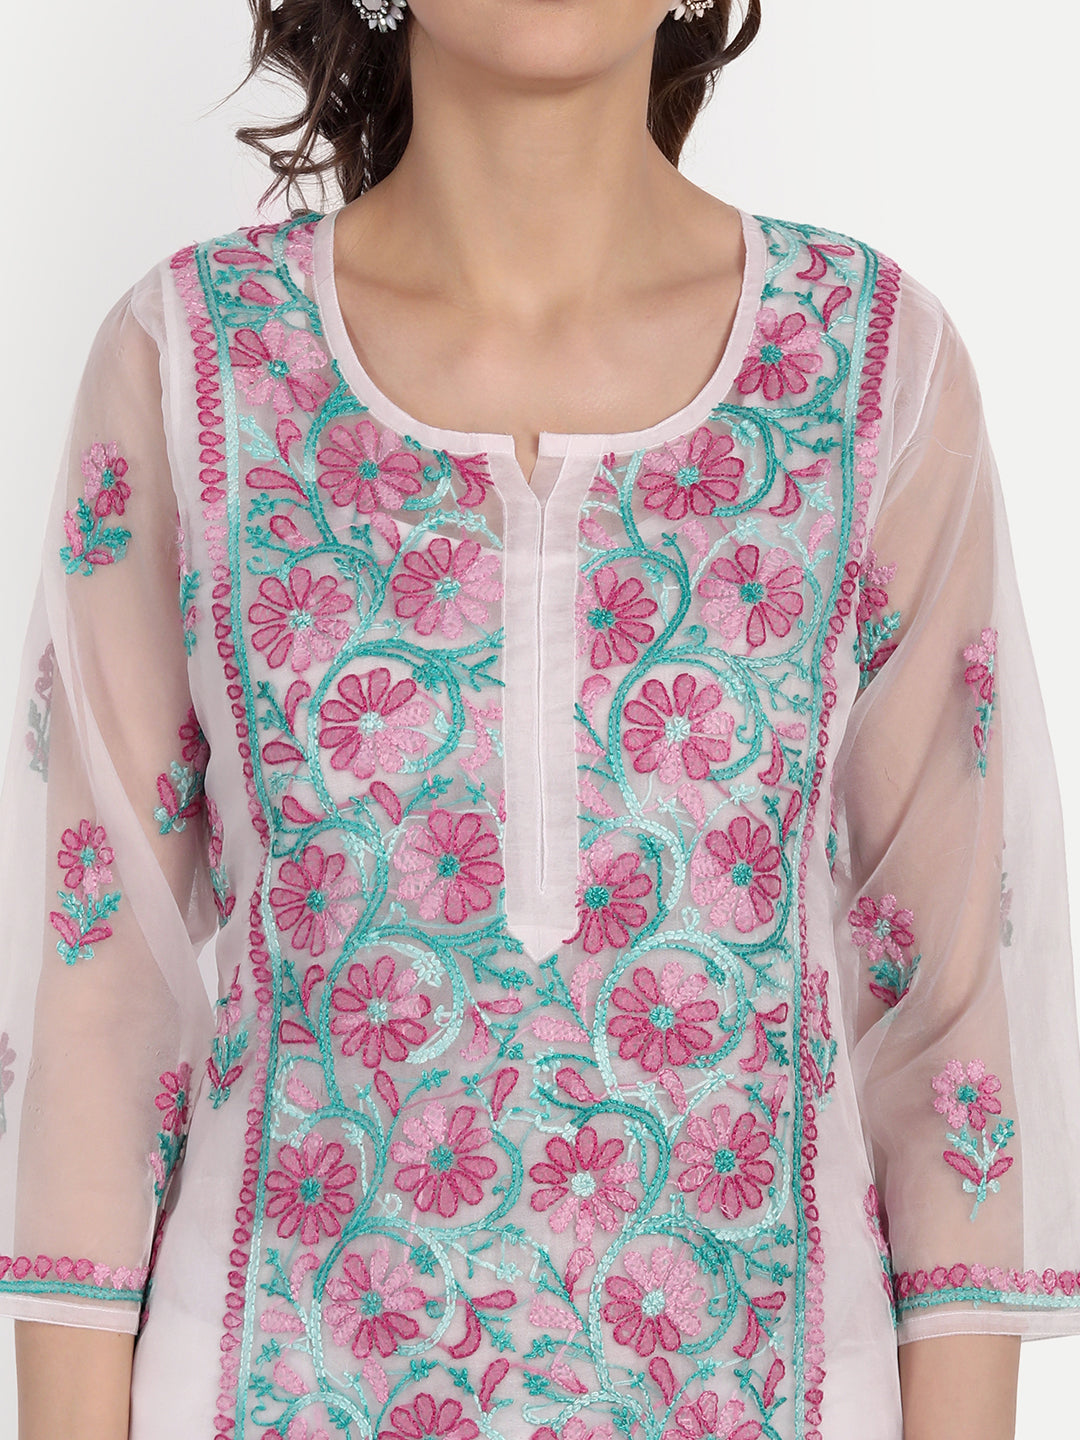 Buy PINAK Lucknow Chikankari Kurti | Cotton Chikan kurti | Teal Color  Sleeveless Kurti | Size:46(2XL)_23156 at Amazon.in